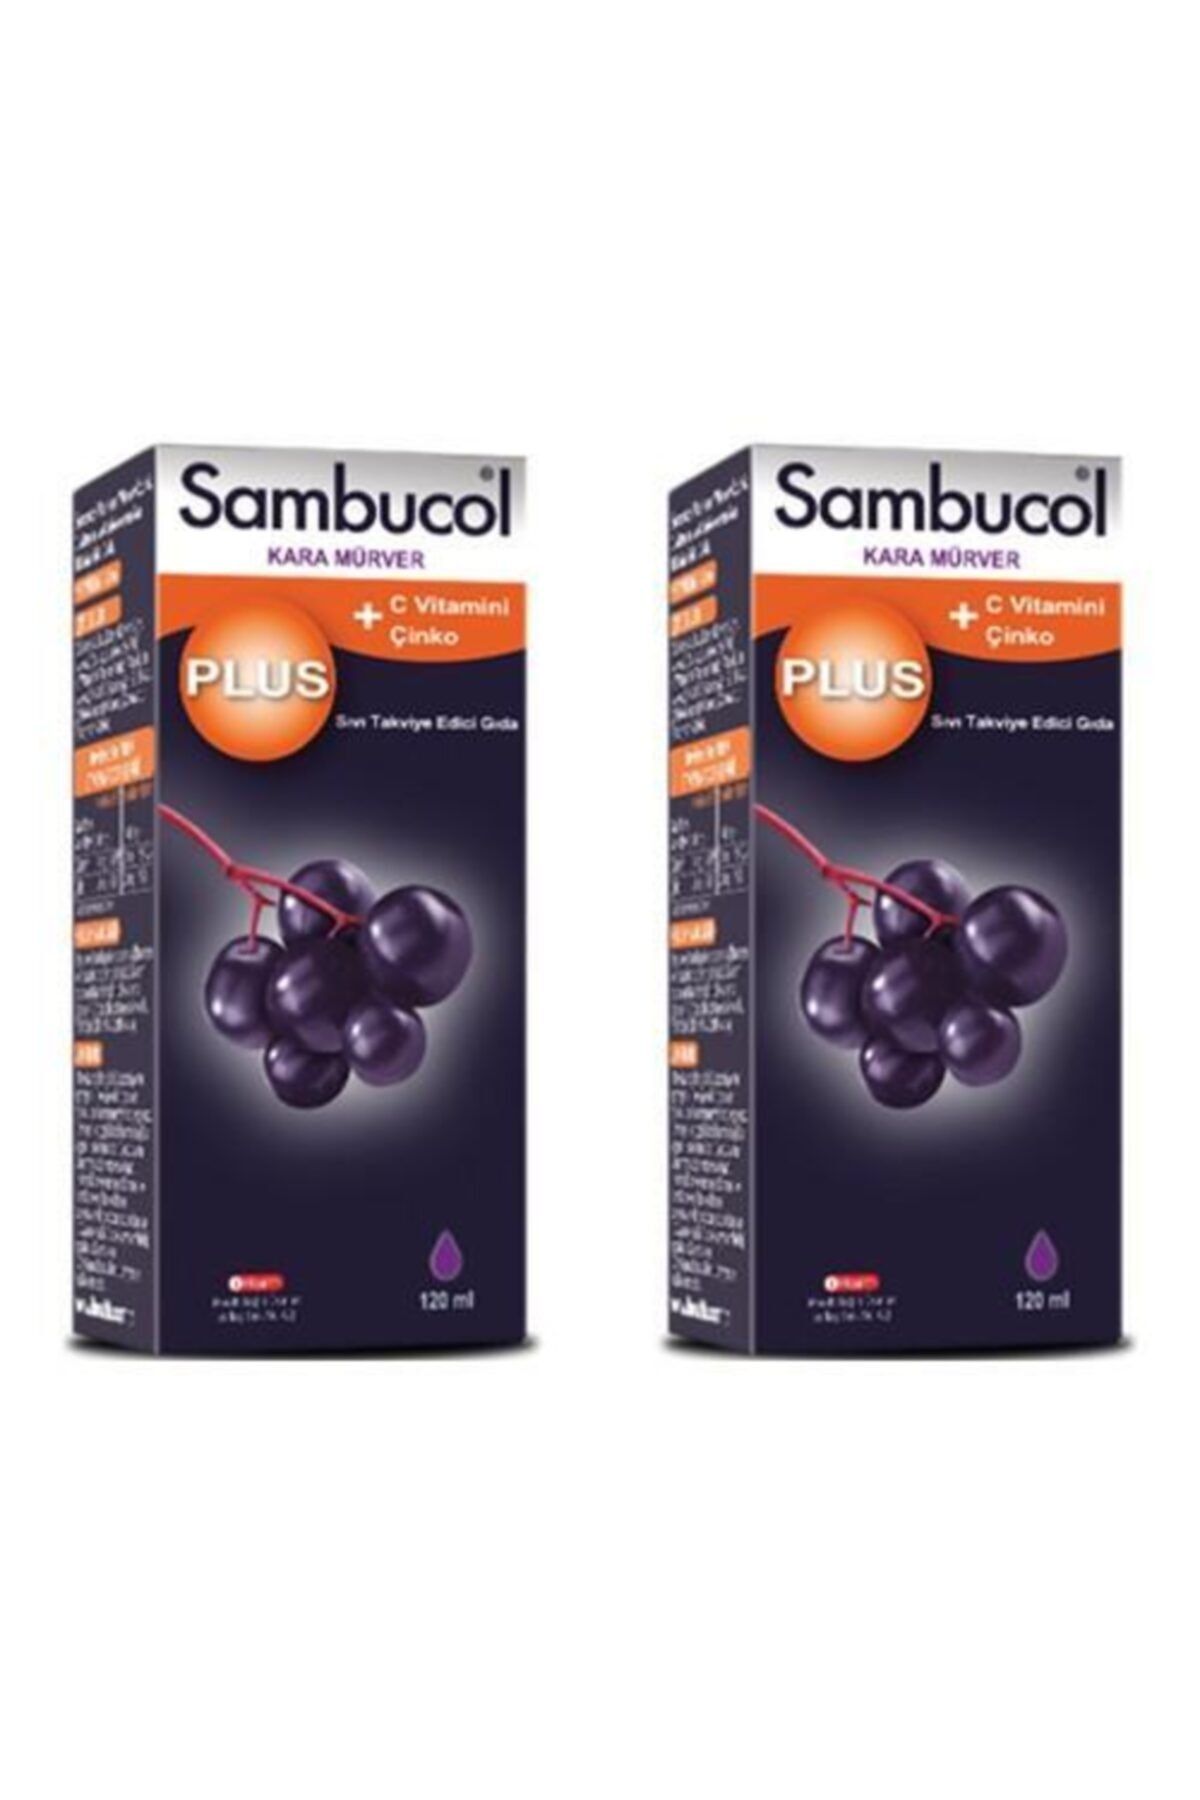 Sambucol Plus Kara Mürver Özütü + C Vitamini & Çinko 120 Ml 2 Adet